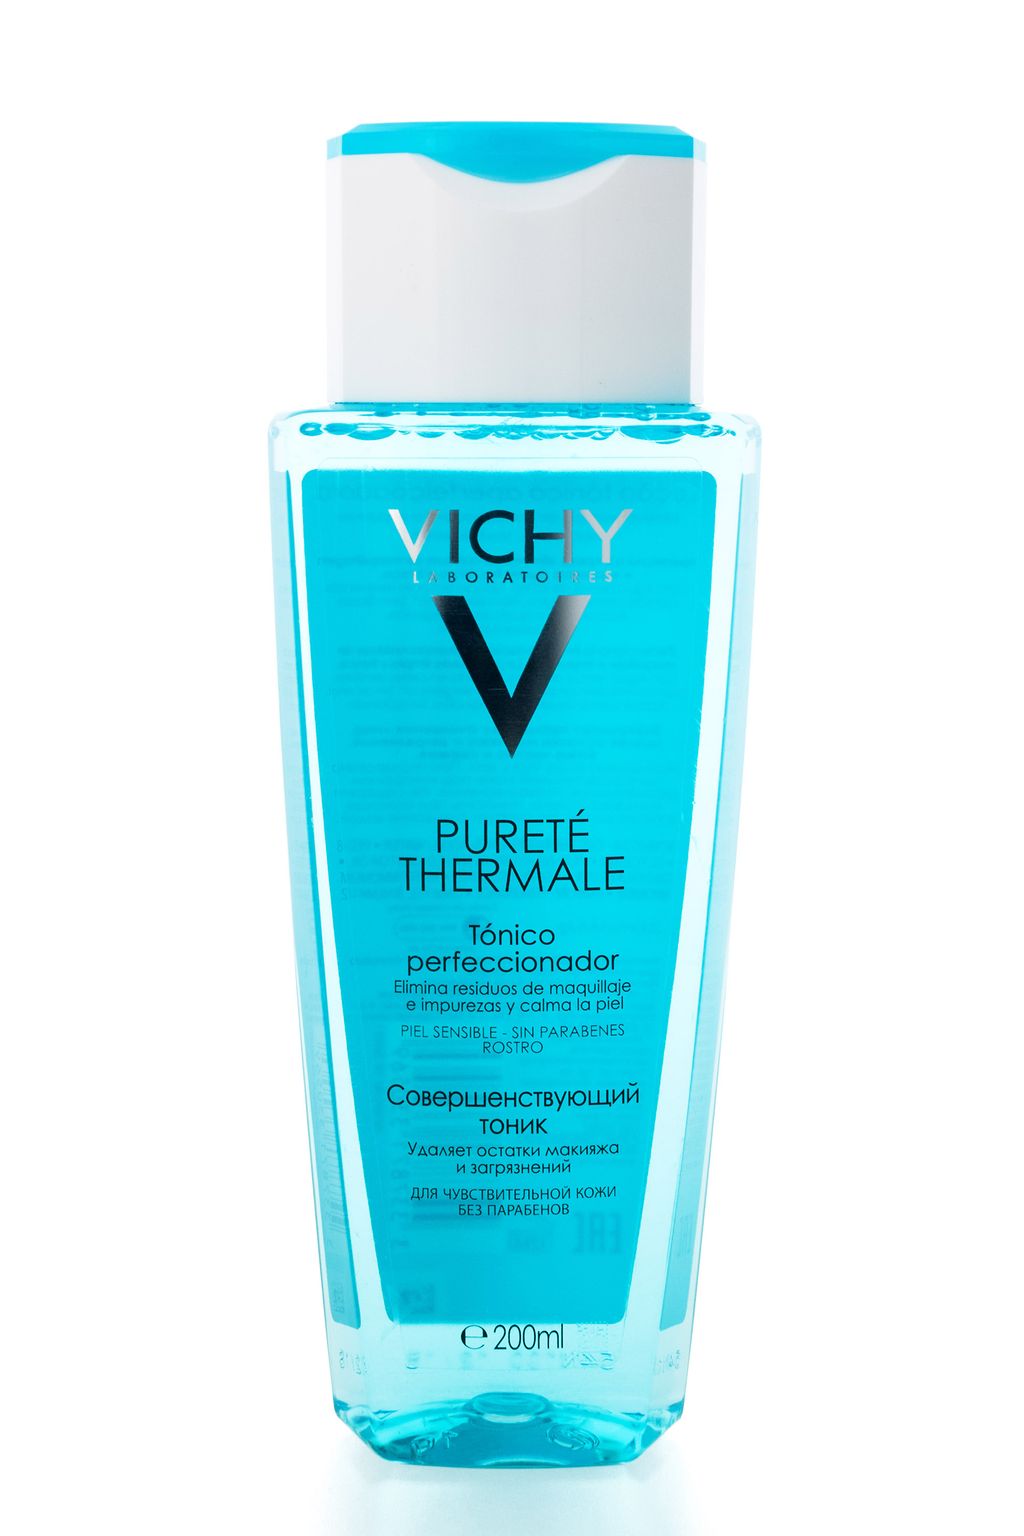 Vichy Purete Thermale совершенствующий тоник для всех типов кожи, тоник для лица, 200 мл, 1 шт.